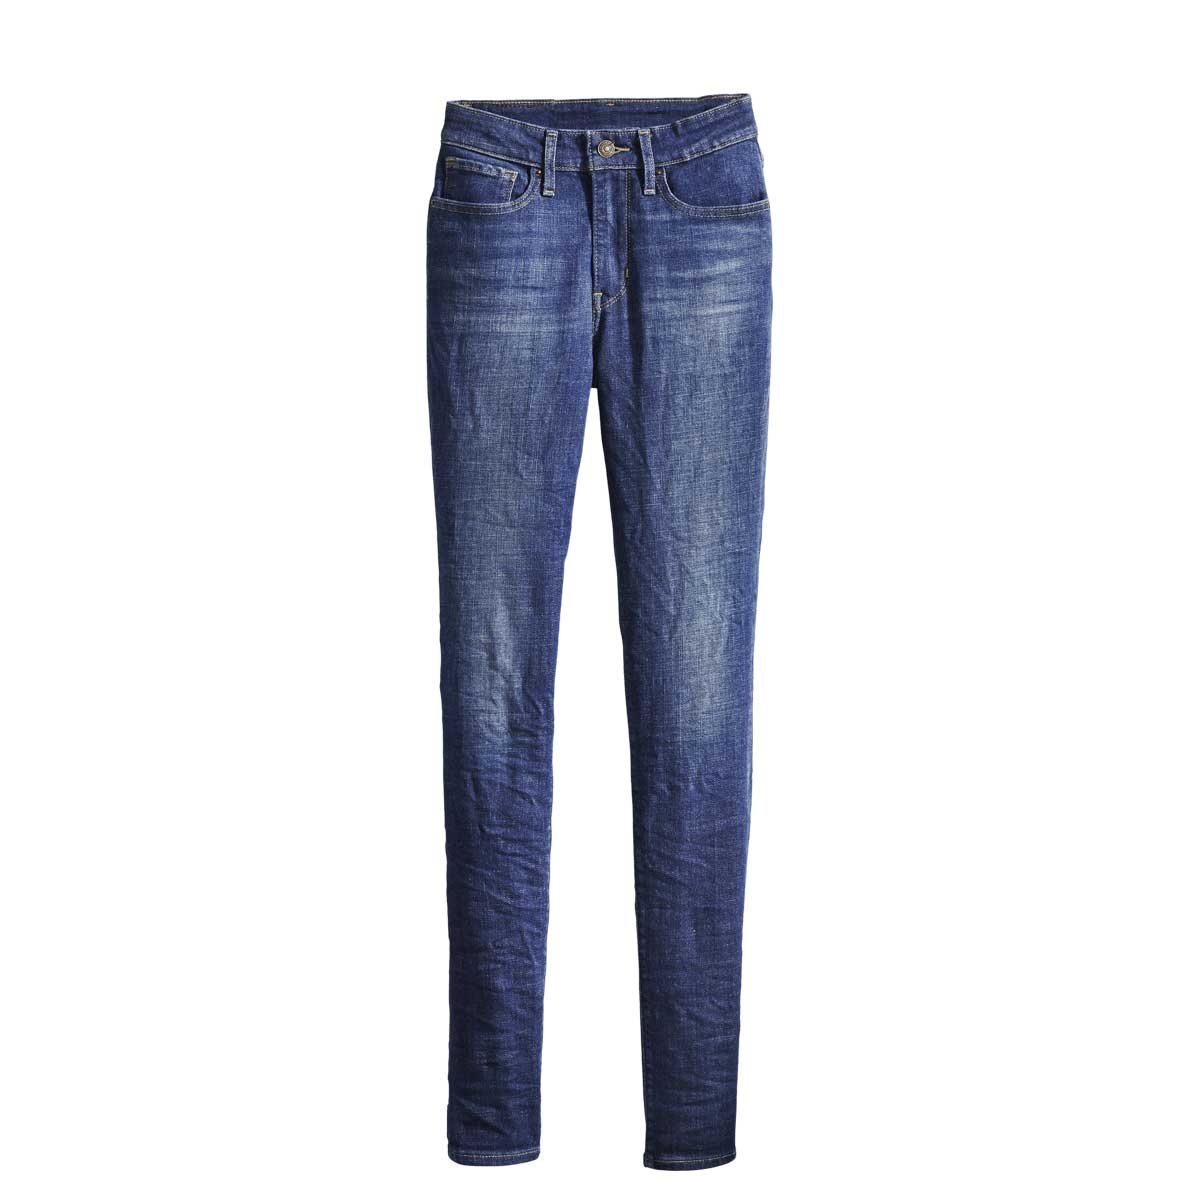 Jeans Levis Woman, Corte Skinny